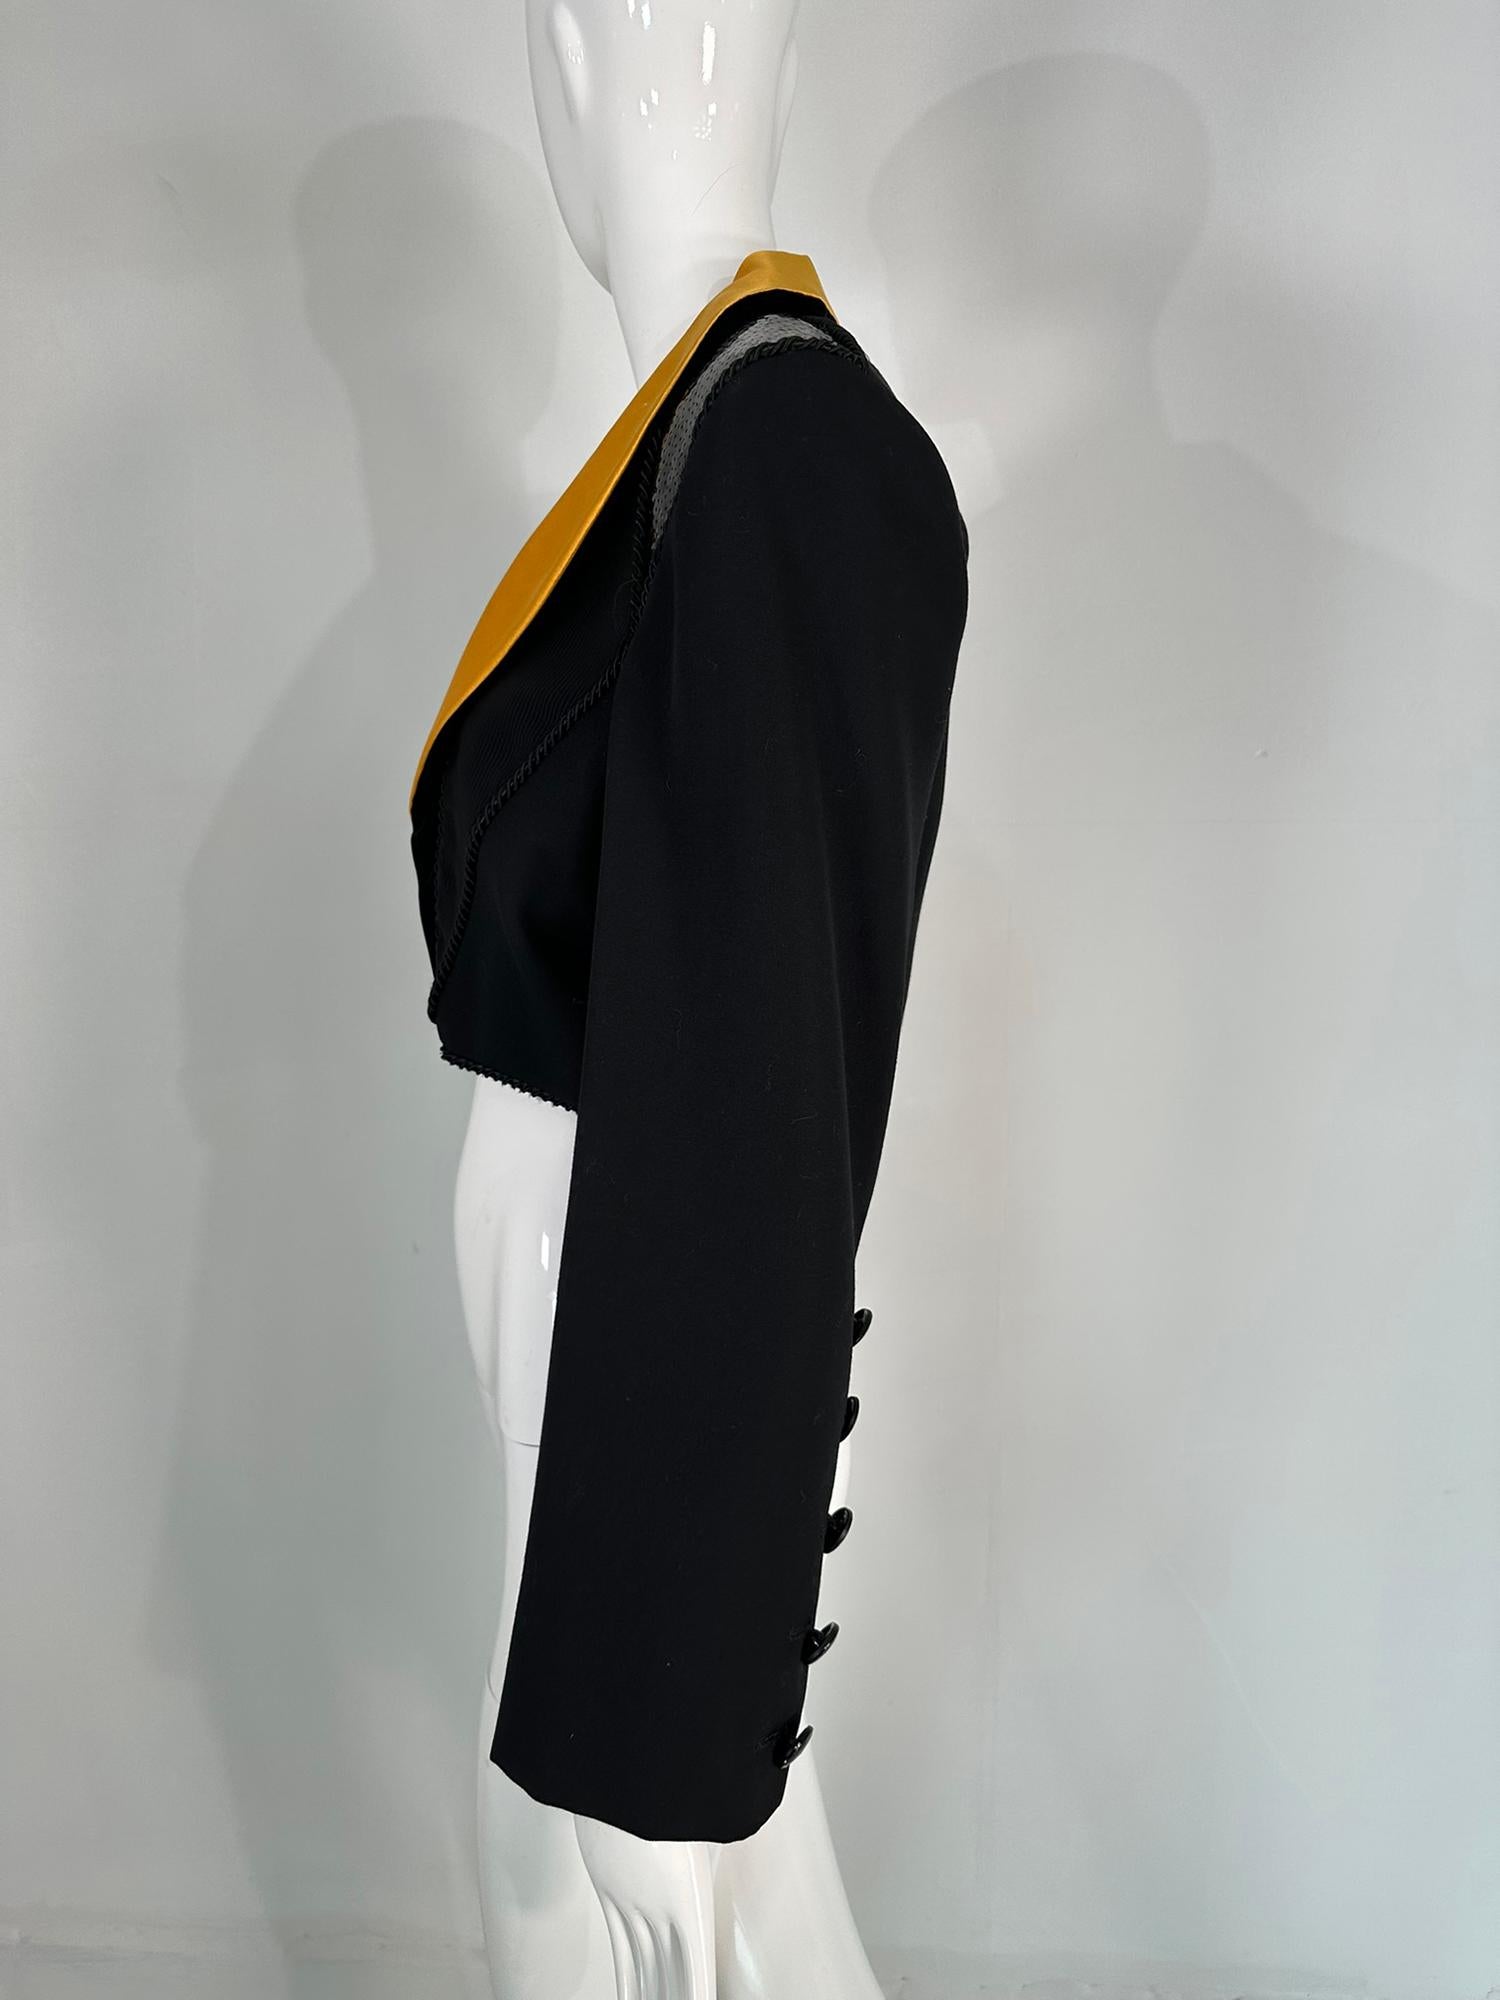 Yves Saint Laurent Rive Gauche Black Sequin Yellow Satin Cropped Jacket 1990s For Sale 1